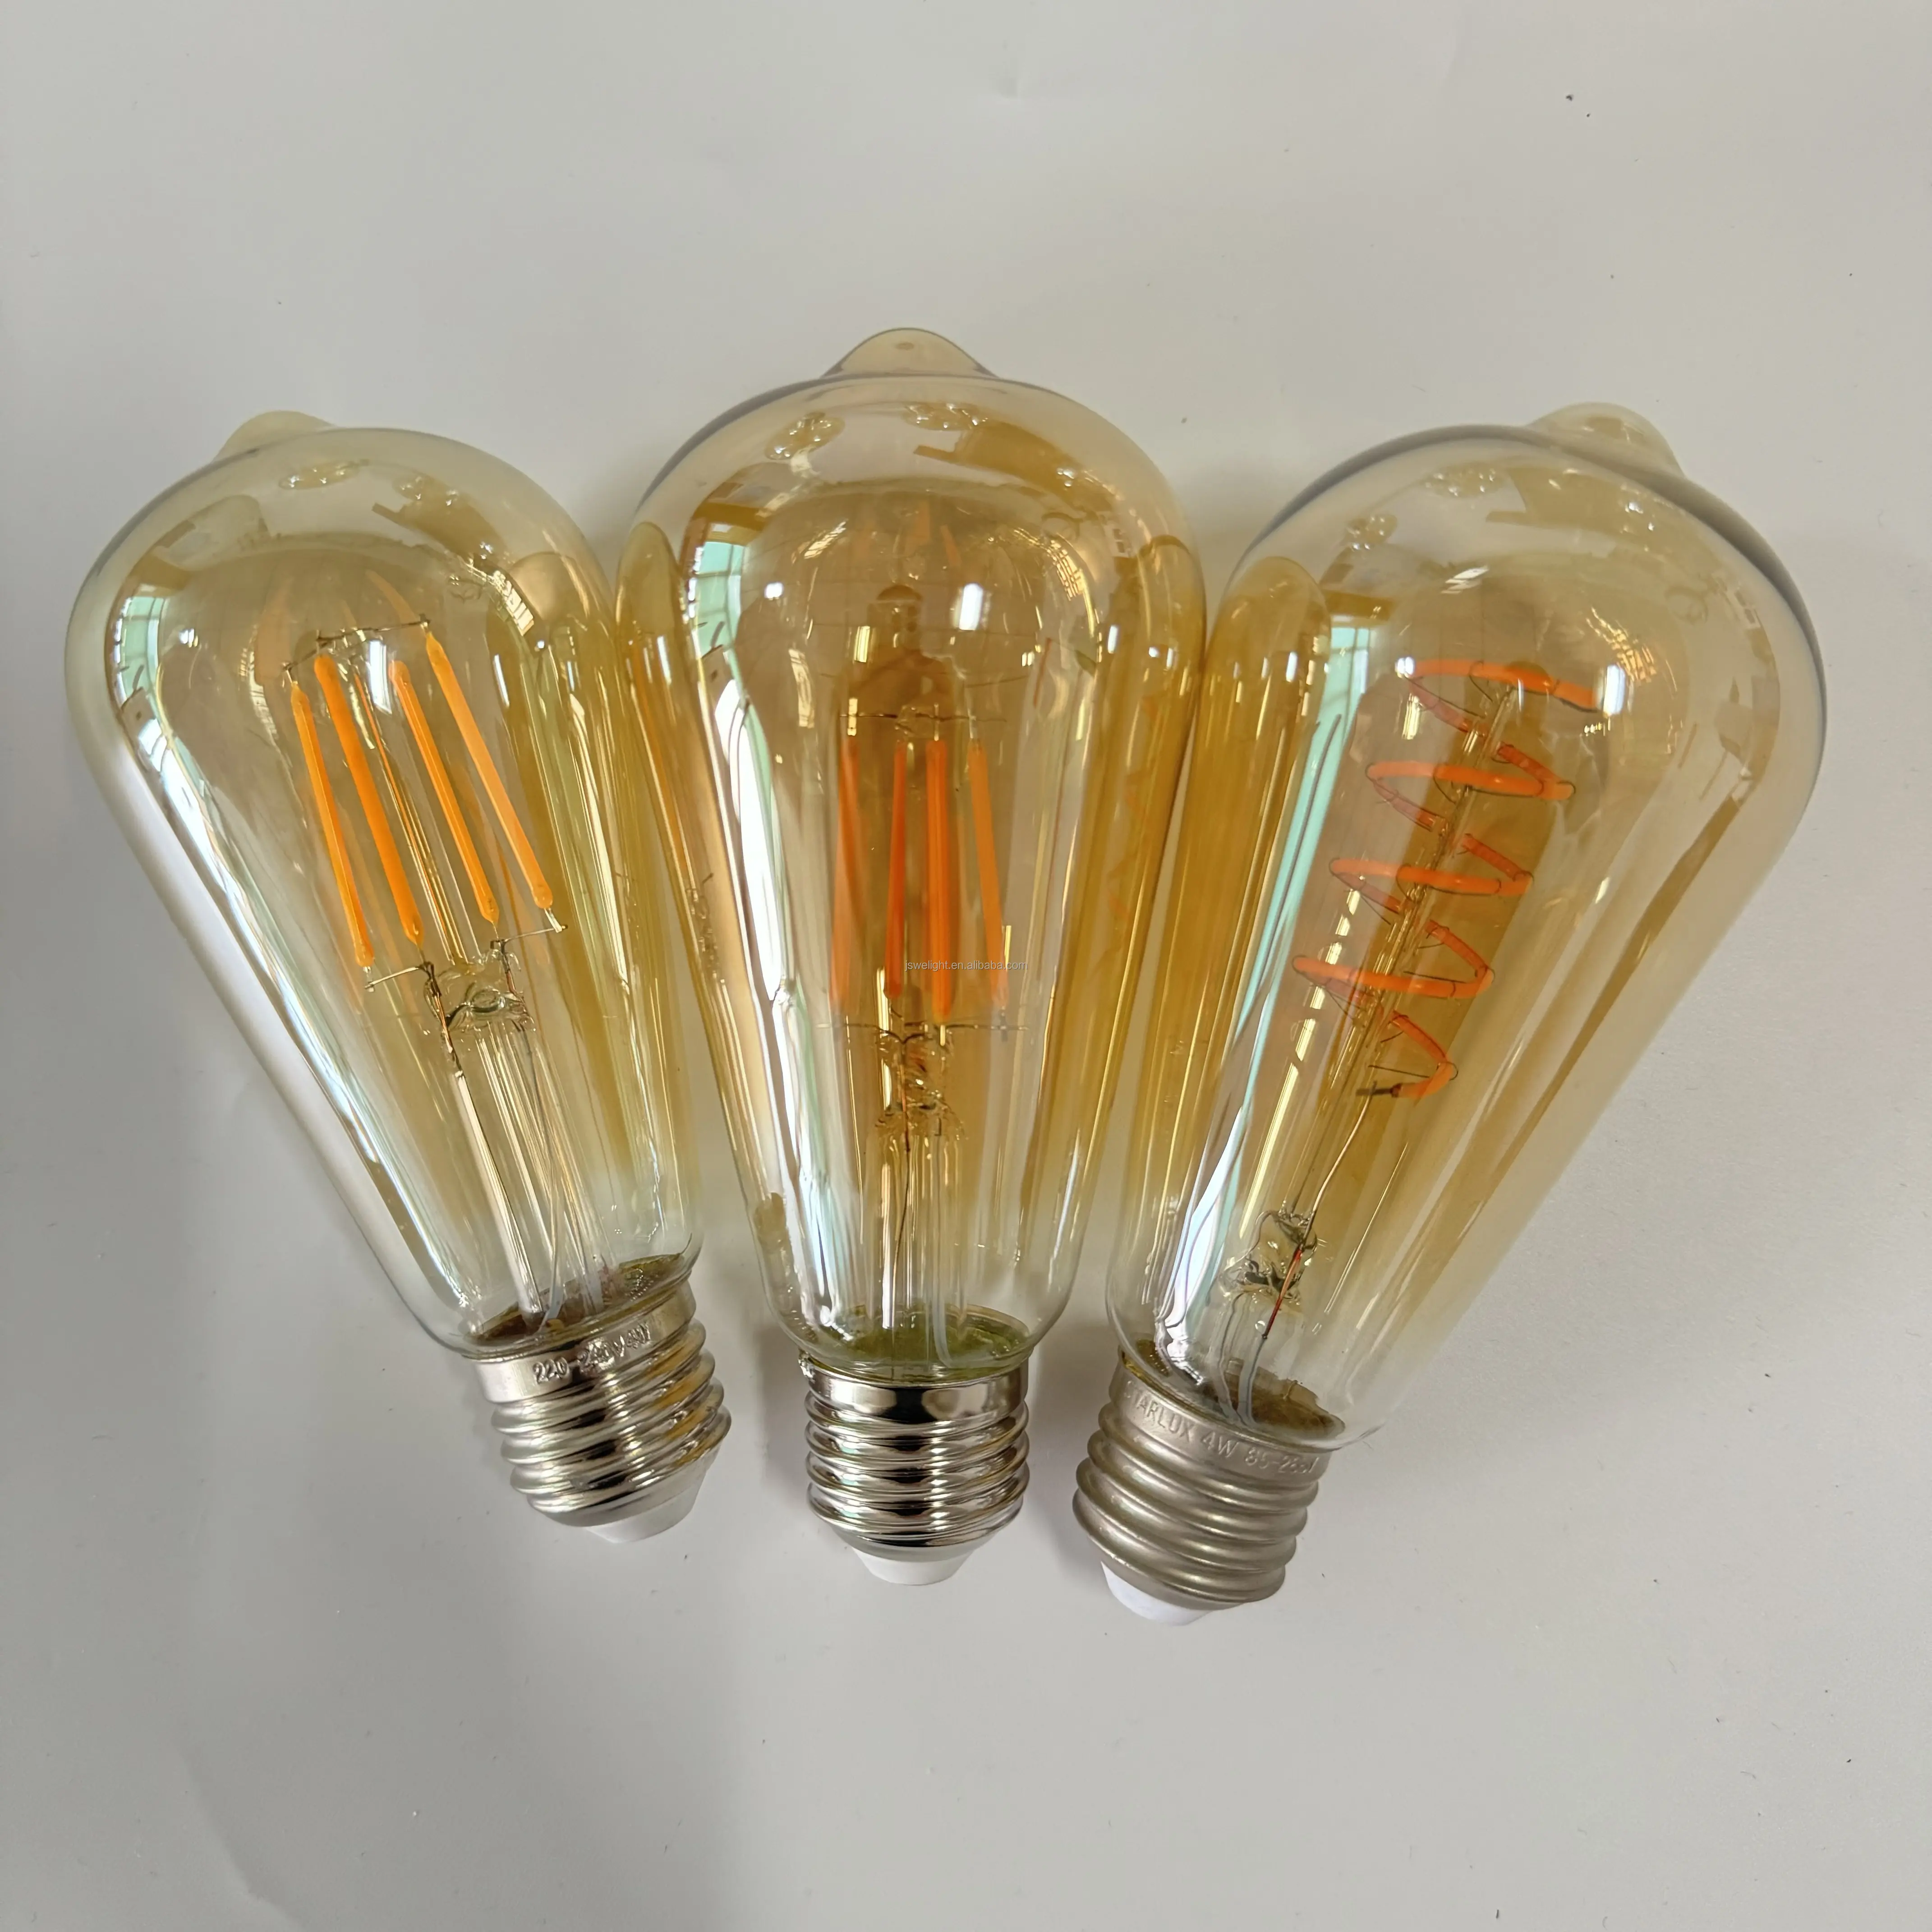 Lighting Decoration Led ST64 Vintage Glass Power Saving Lamps 220V 110V 4W 6W E26 E27 LED filament Bulb Lights